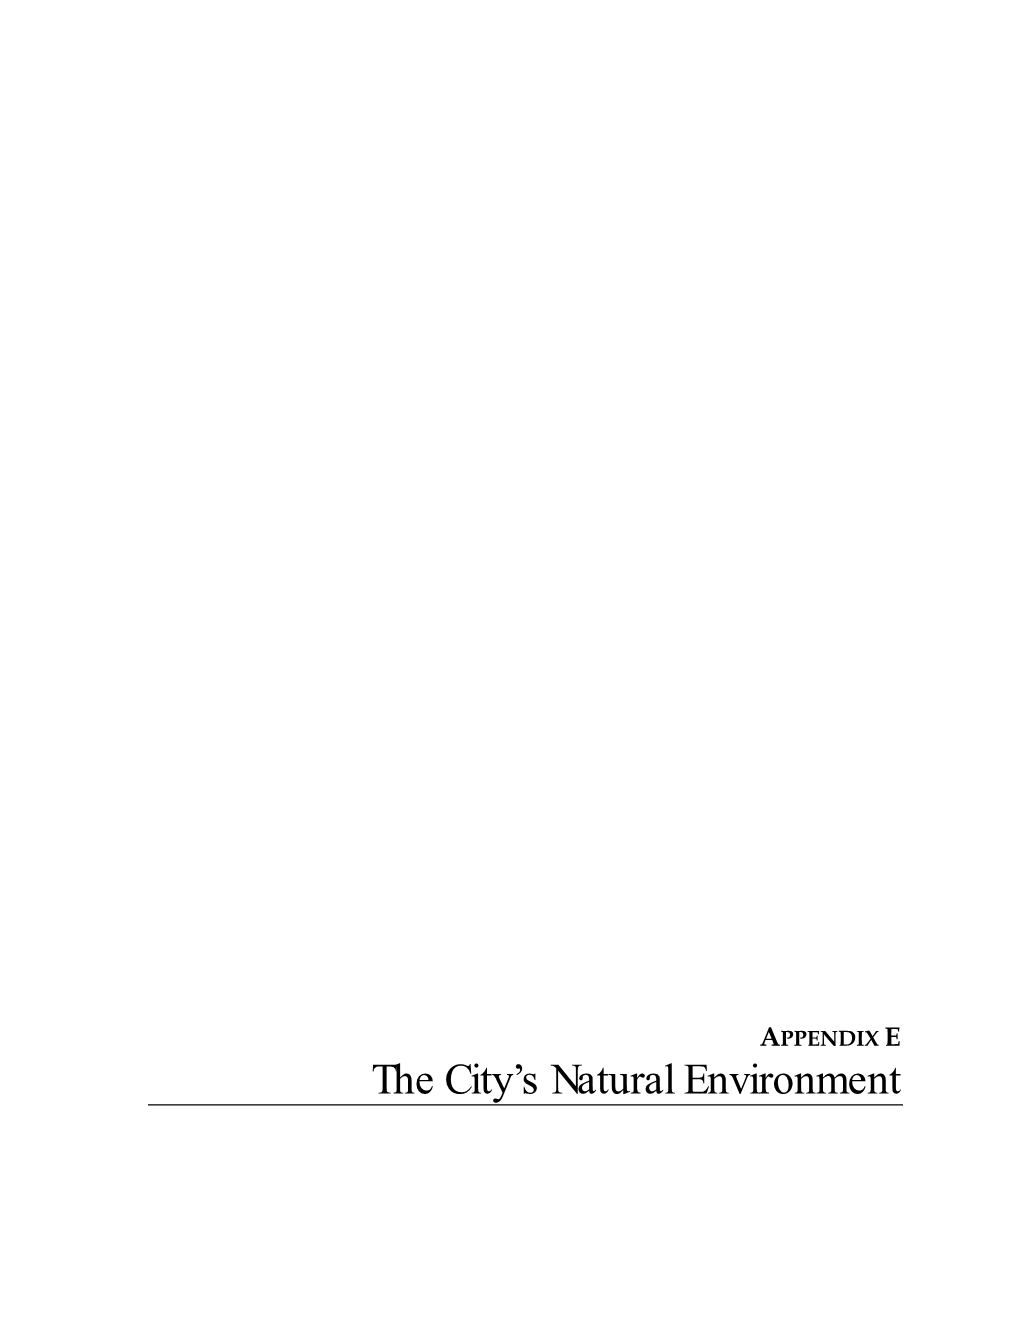 Appendix E: the City's Natural Environment